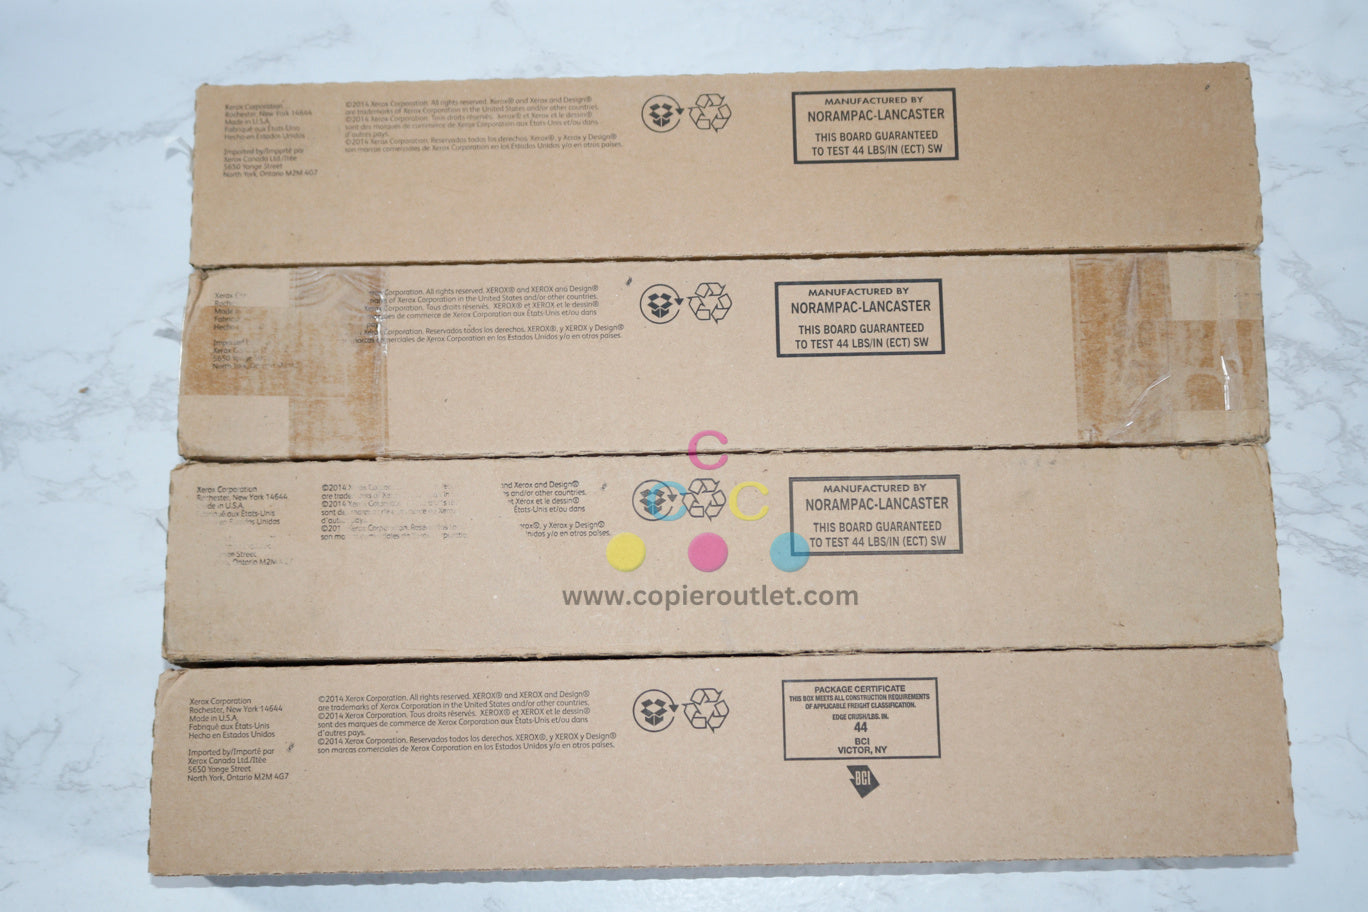 New Genuine Xerox Color C60,C70 CMYK Toner Set 006R01655,6R01656,6R01657,6R01658